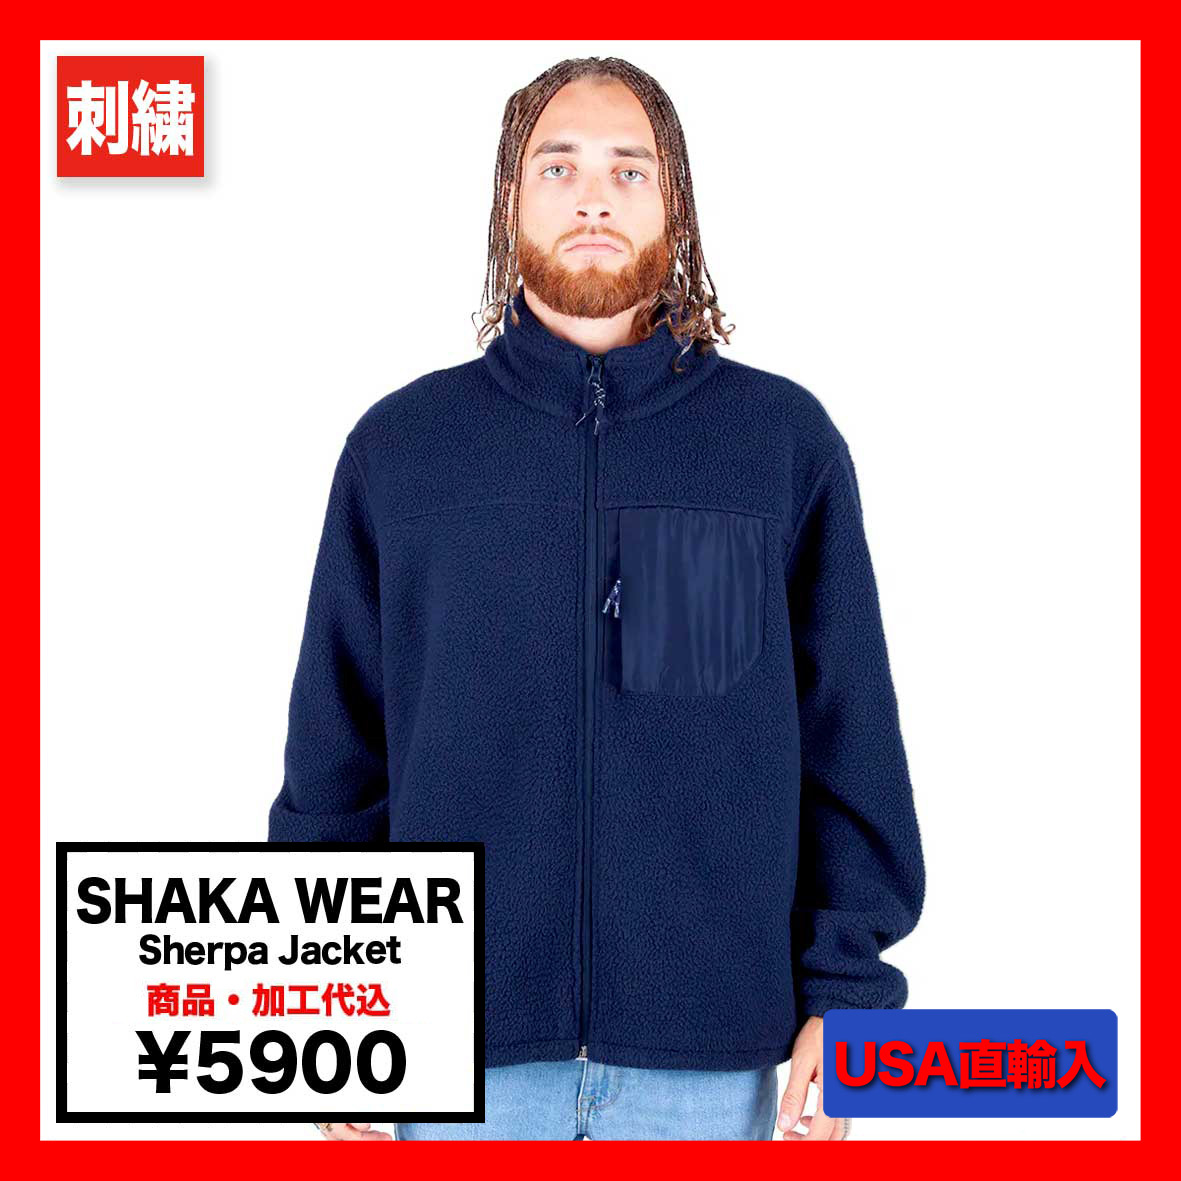 SHAKA WEAR シャカウェア Sherpa Jacket (品番SWSJ)